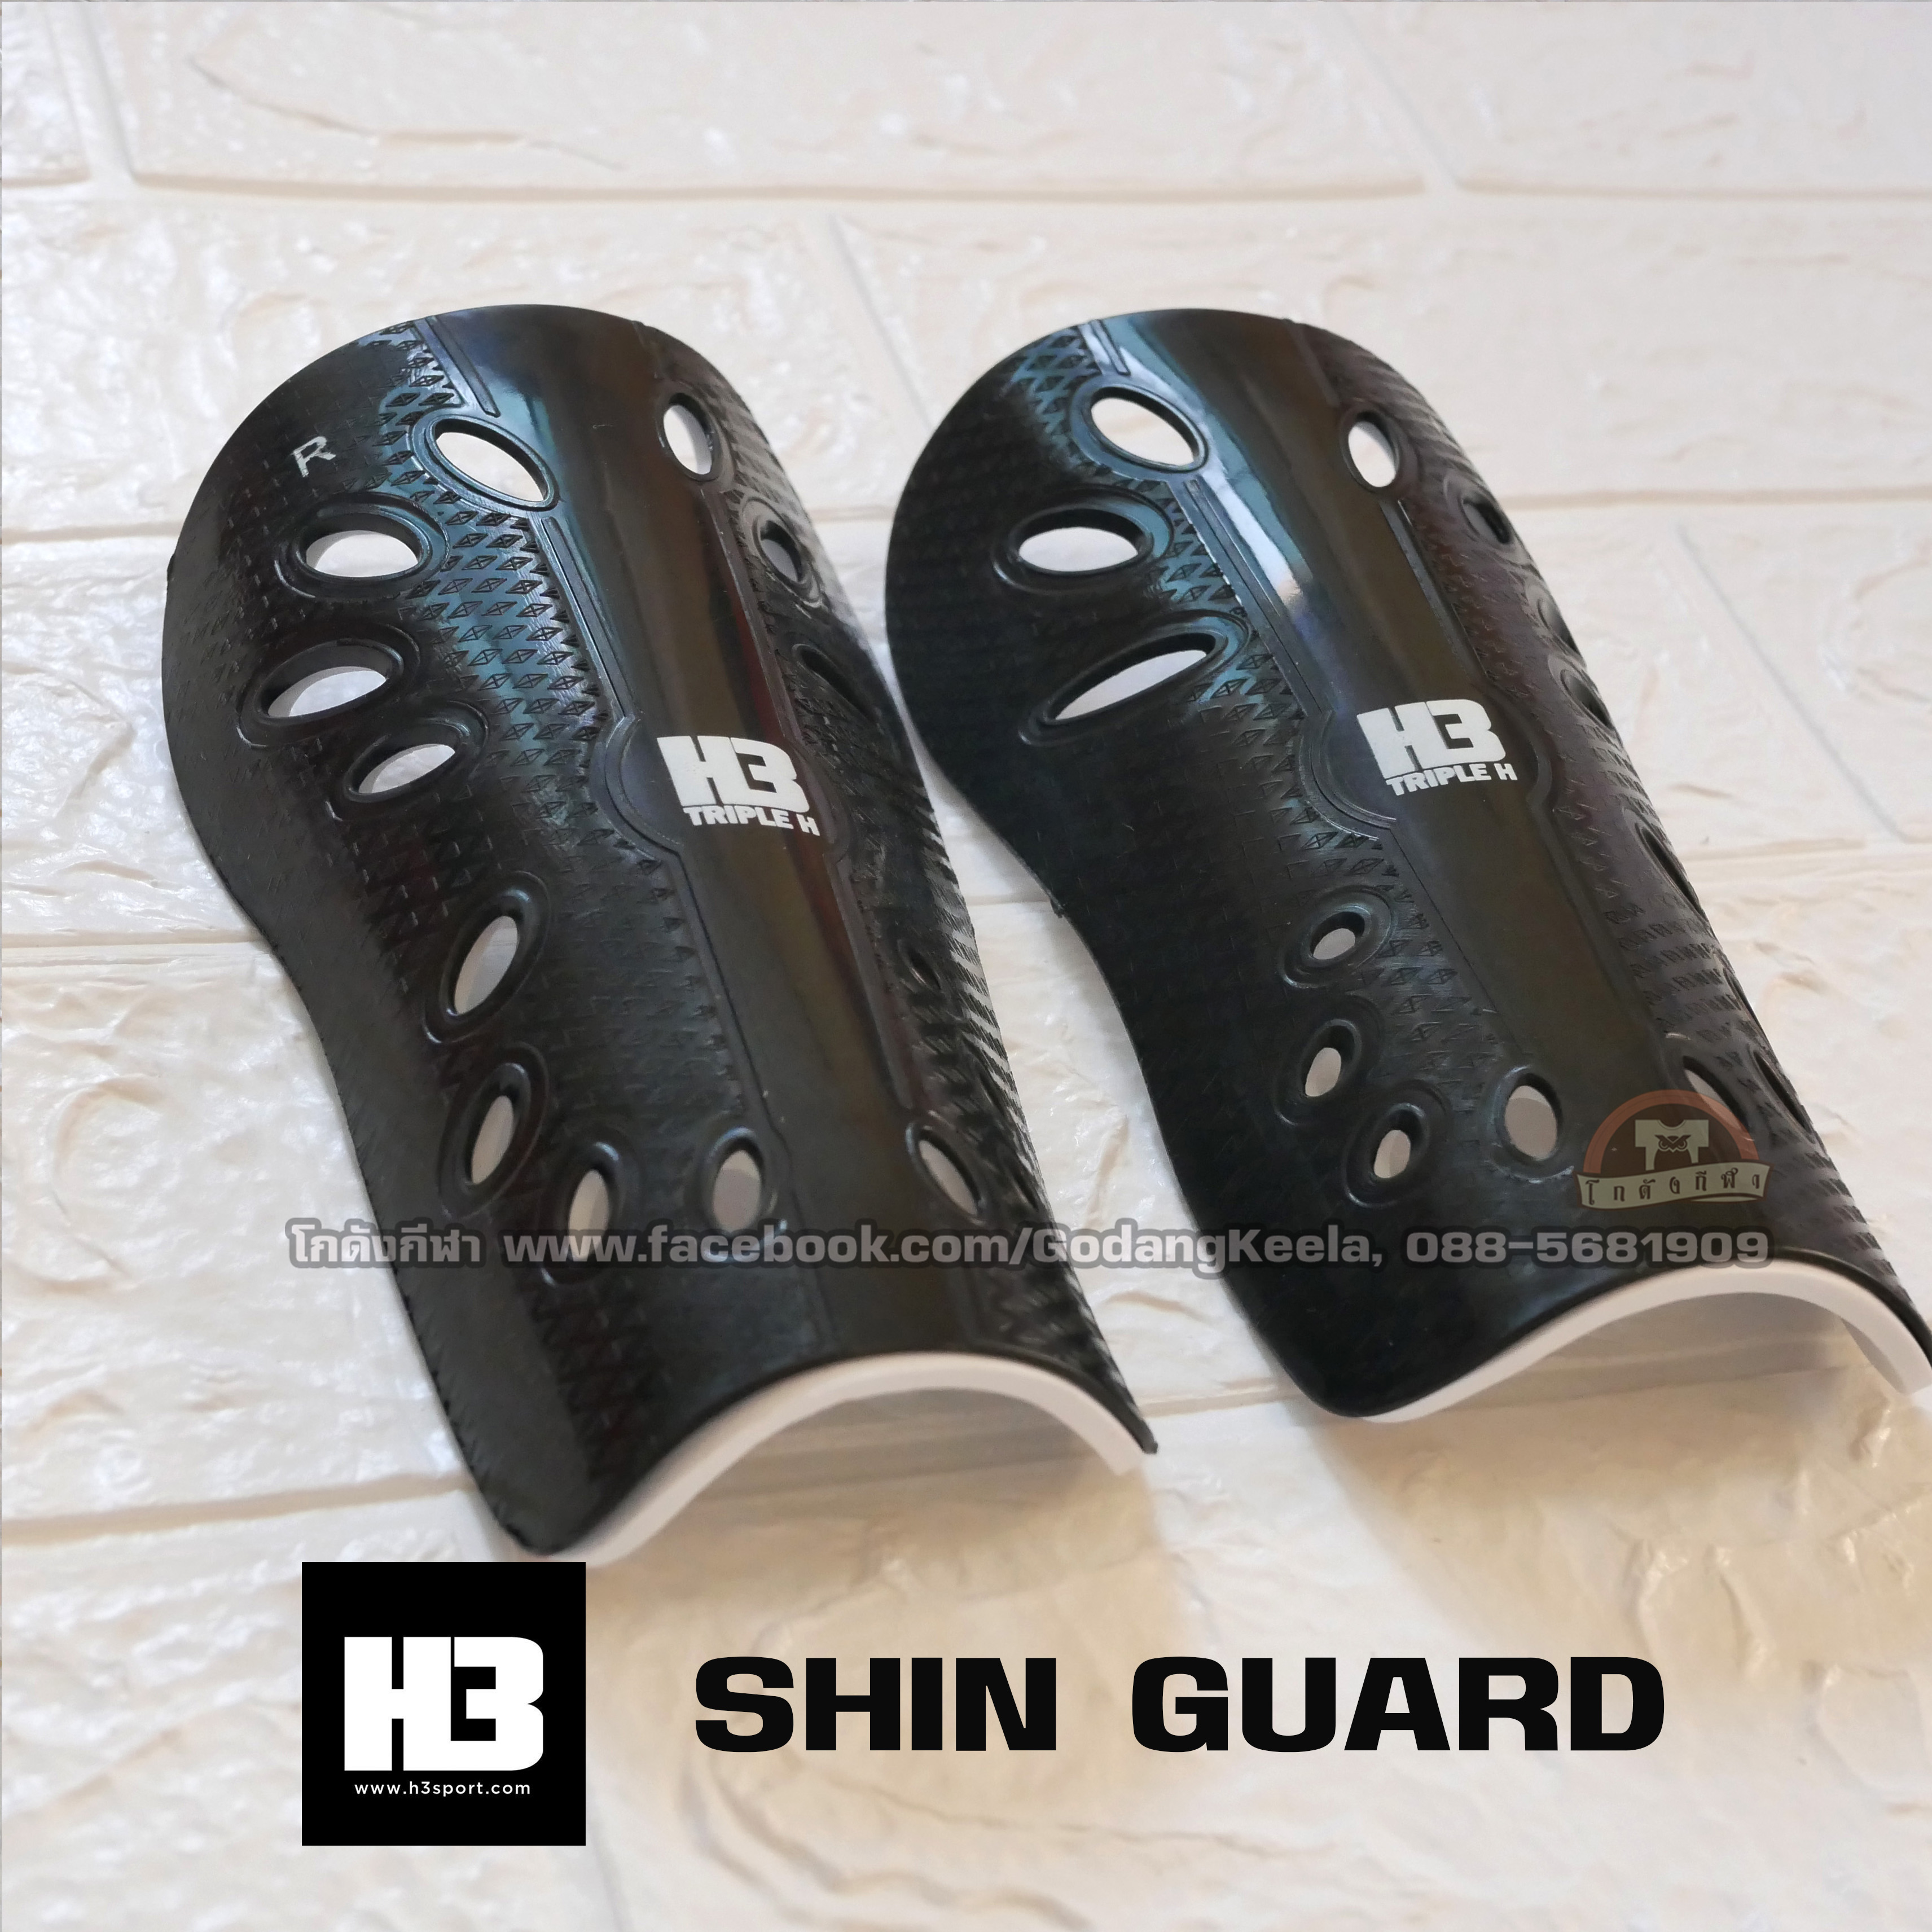 H3 สนับแข้งผู้ใหญ่ สนับแข้ง SHIN GUARDS SOCCER ของแท้ 100%